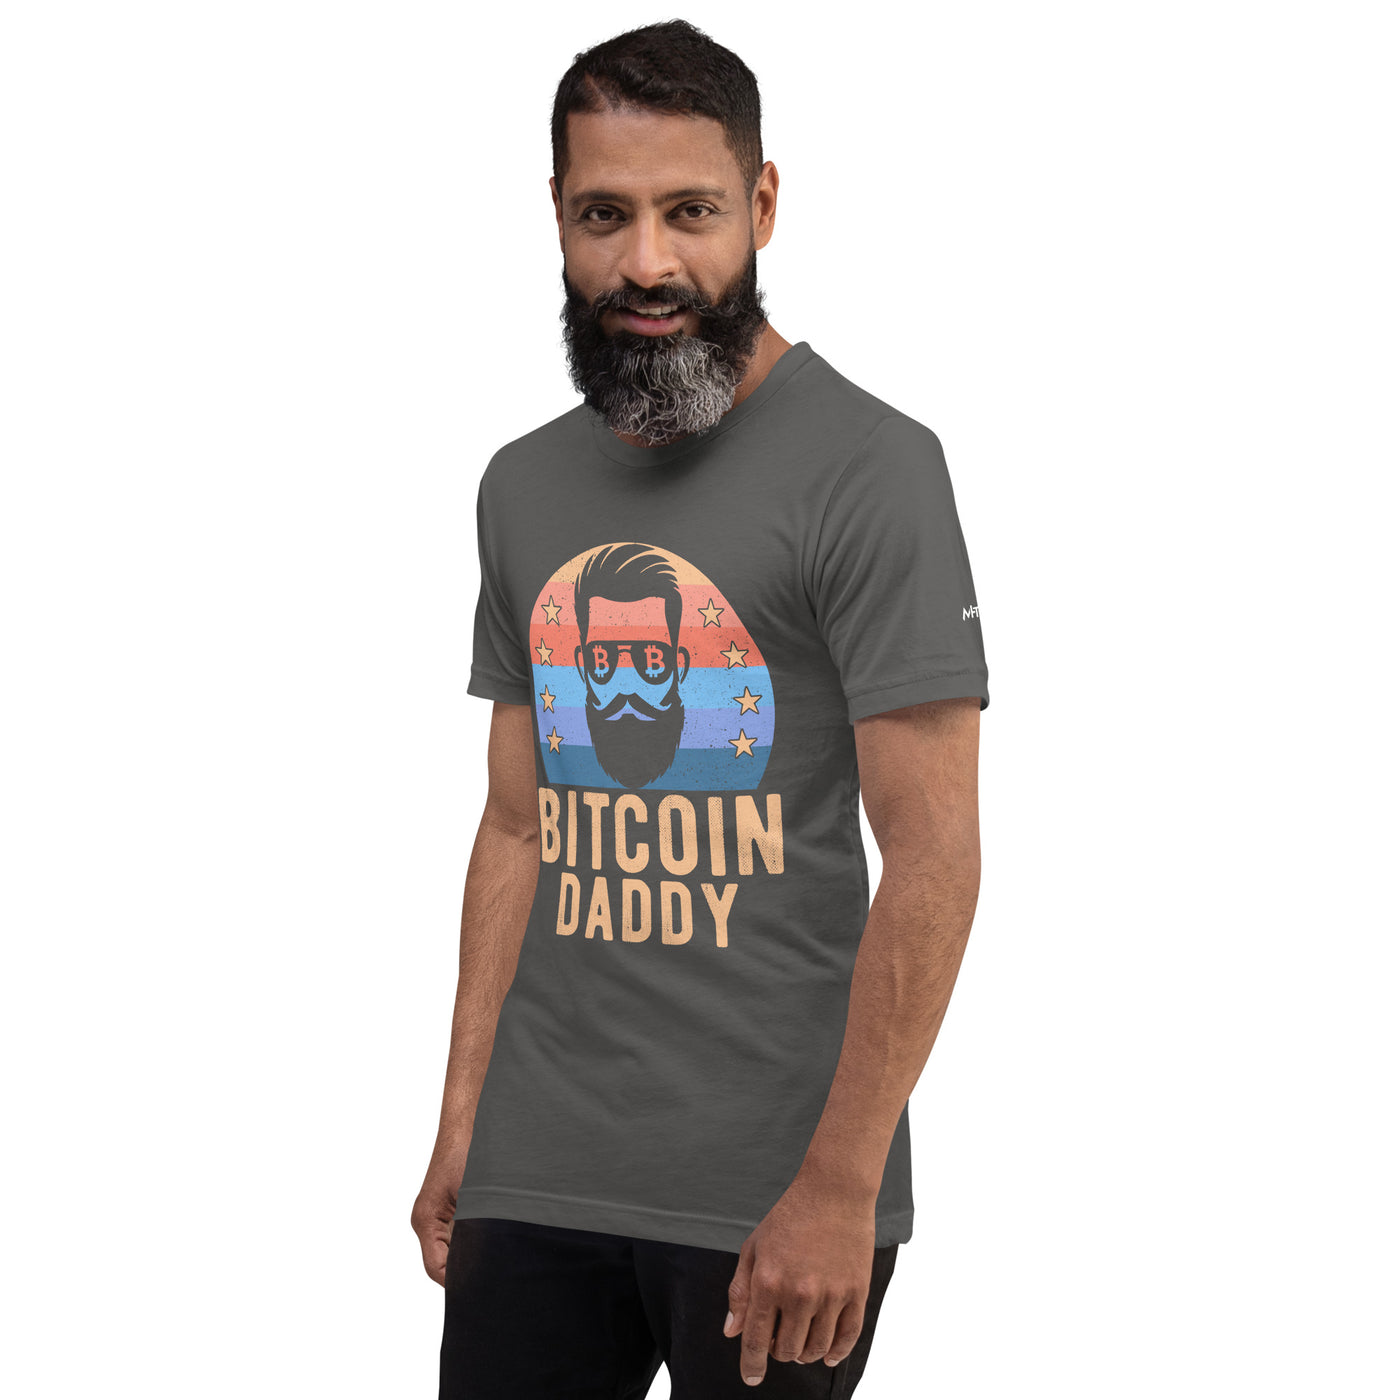 Bitcoin Daddy - Unisex t-shirt